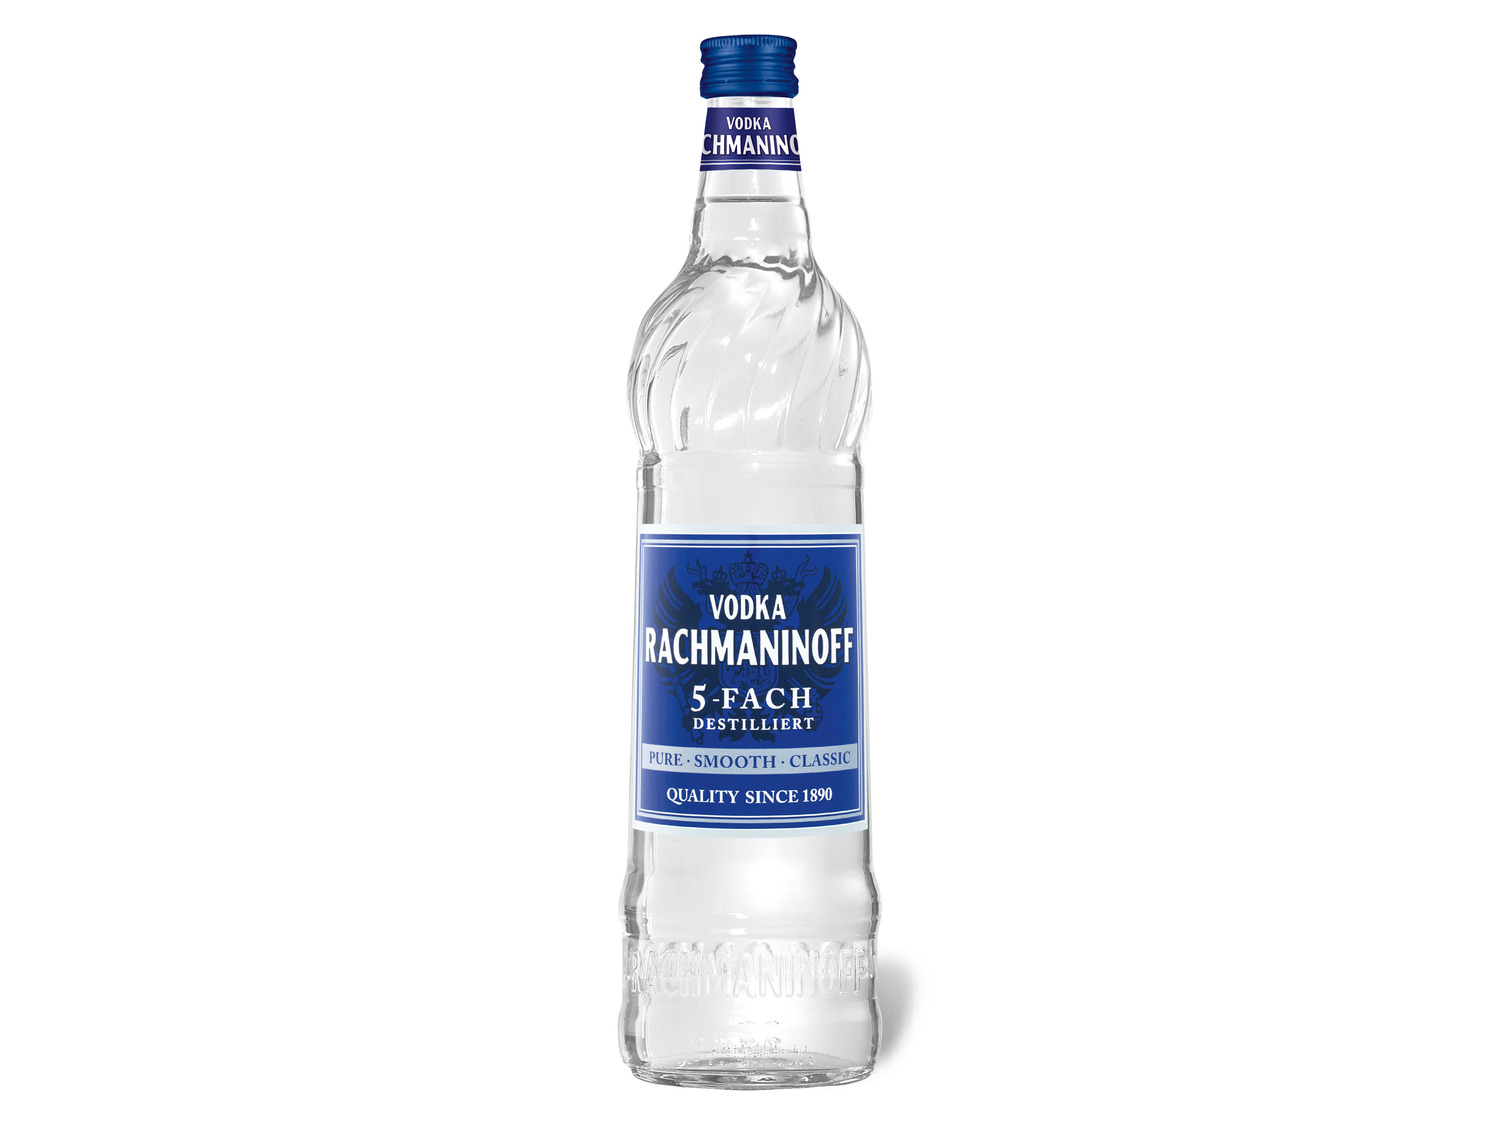 LIDL 5-fach | RACHMANINOFF Wodka destilliert Vol 40%